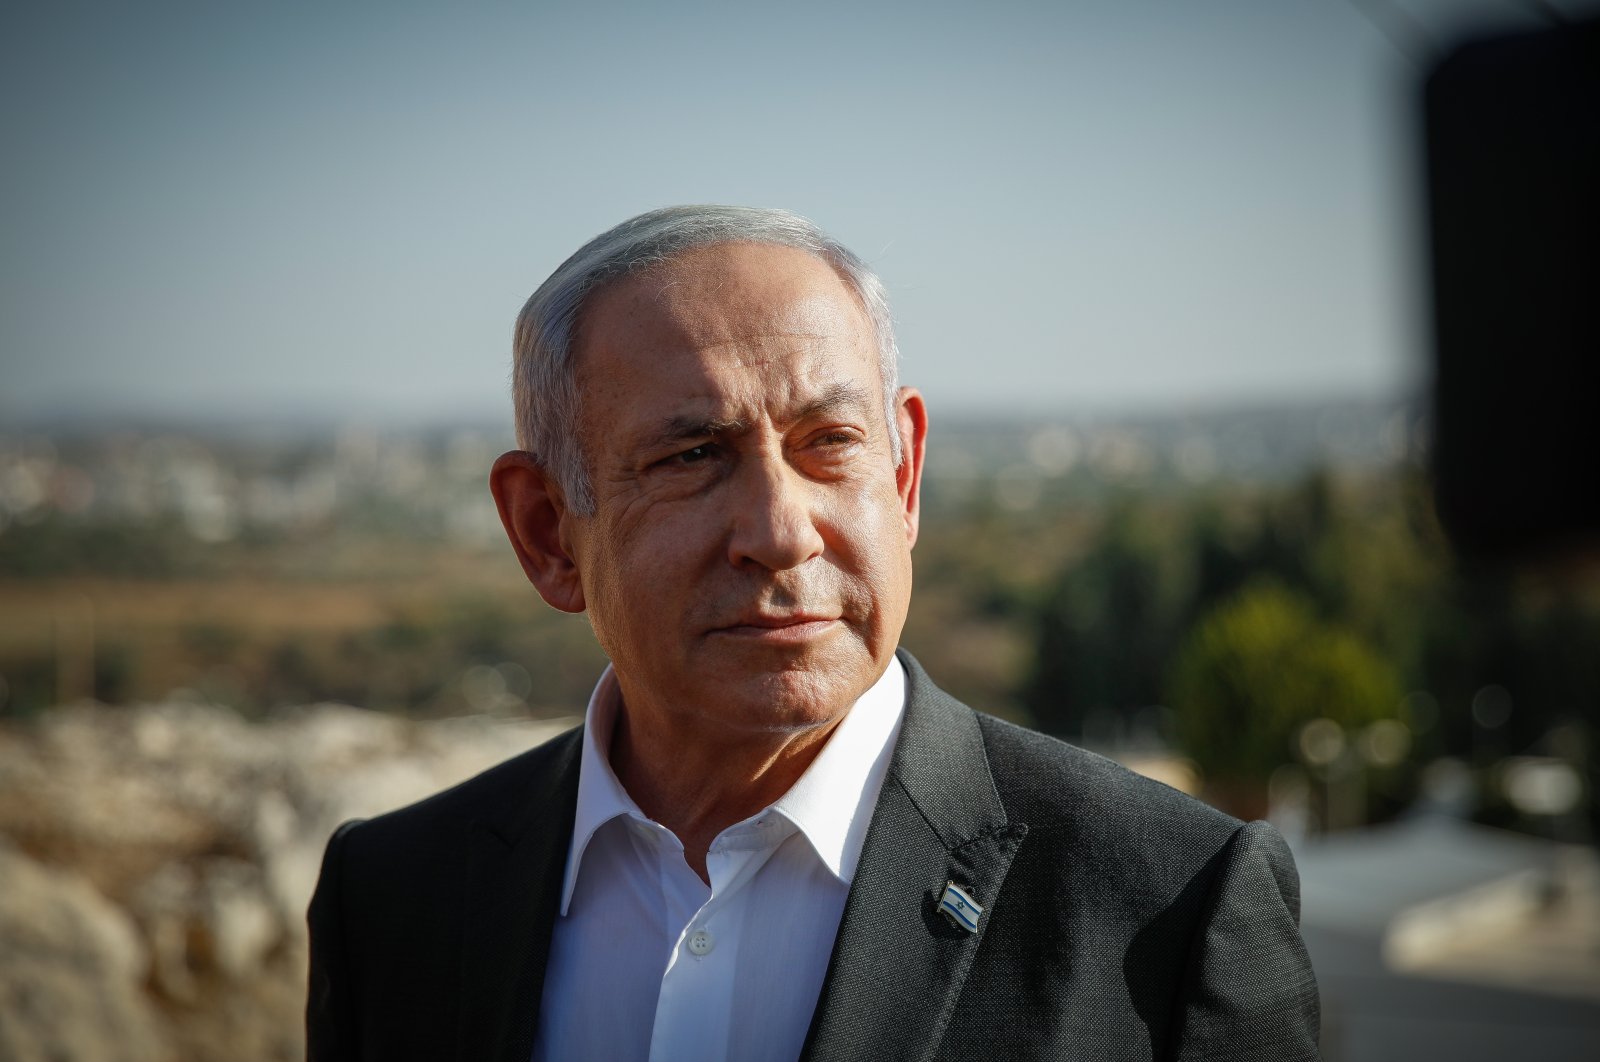 Netanyahu dari Israel mendapat monitor jantung setelah menginap semalam di rumah sakit